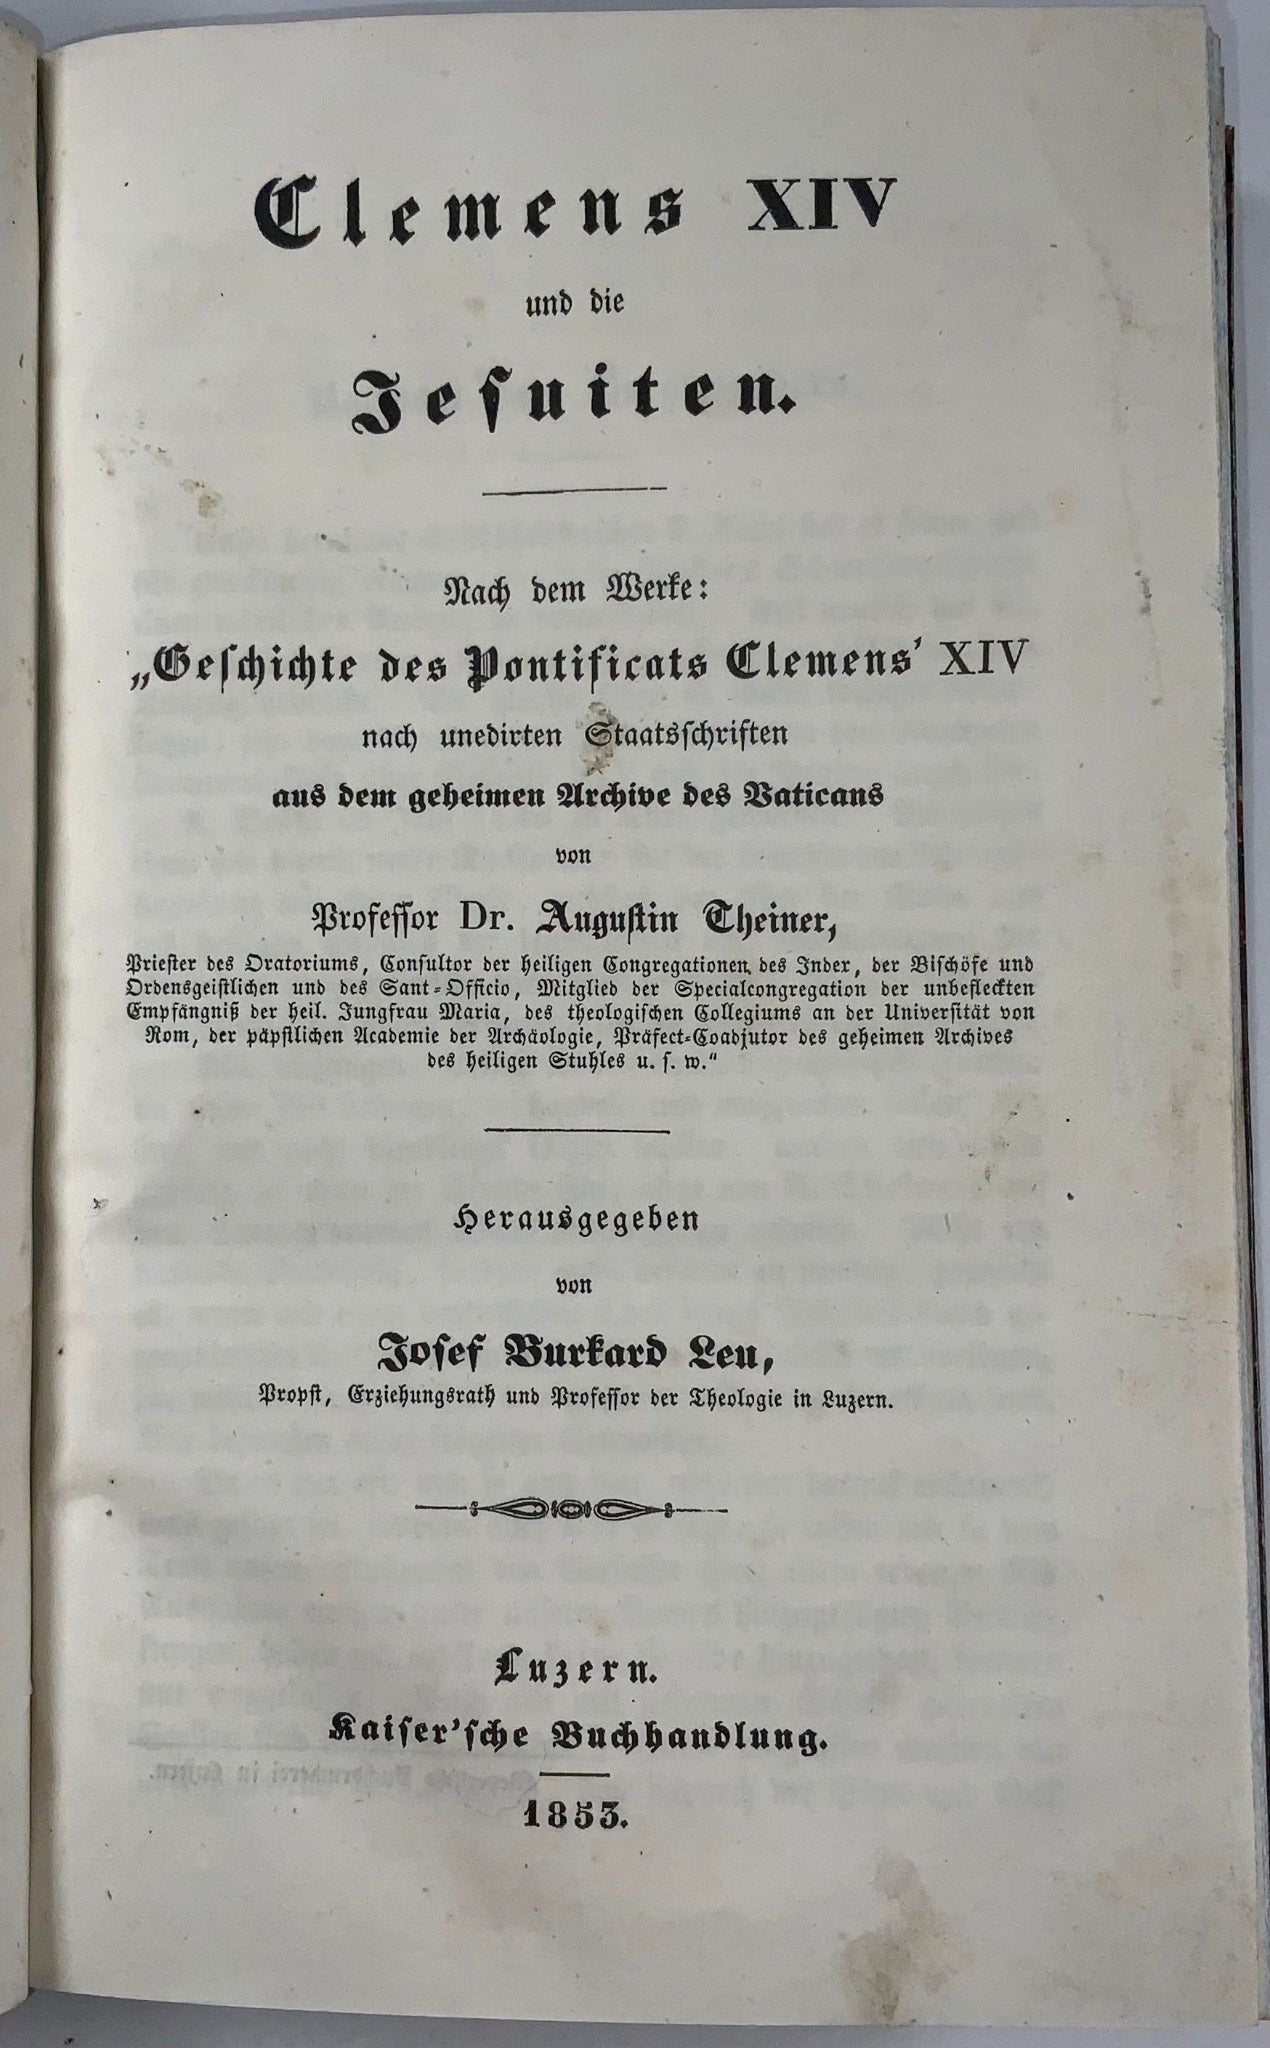 1848-1853 Josef Burkard Leu, three anti-Jesuit works, one on Index